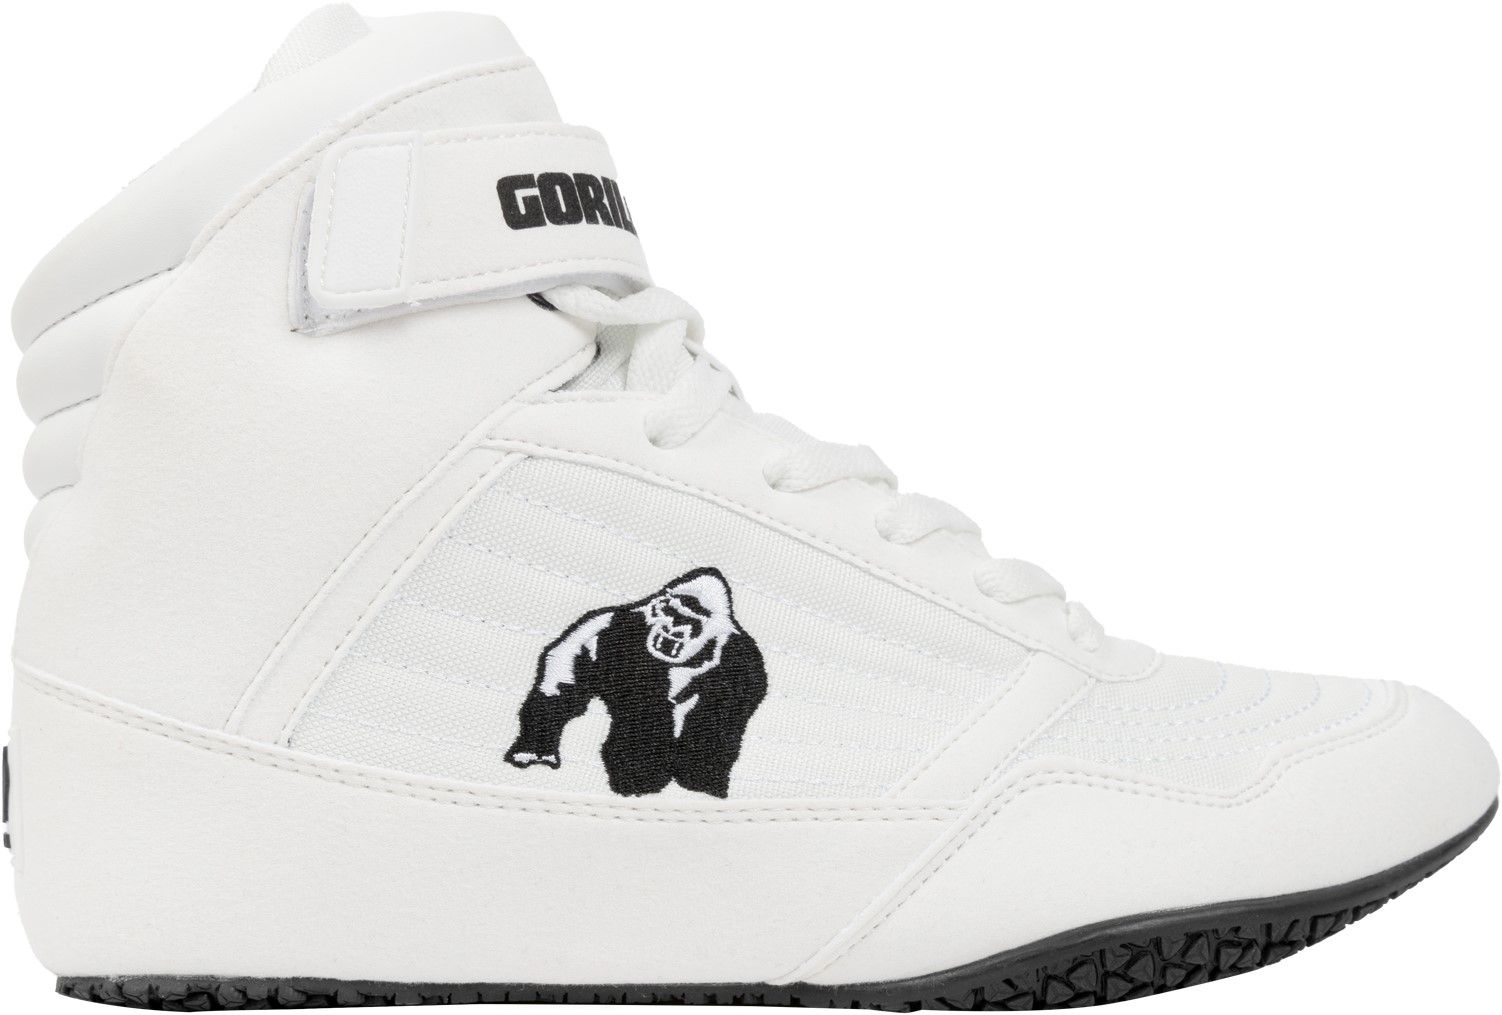 Кроссовки Gorilla Wear High Tops. Кроссовки Gorilla Wear High Top Sneaker. Gorilla Wear кроссовки женские. Кроссовки Gorilla Wear High Tops White. Wear кроссовки